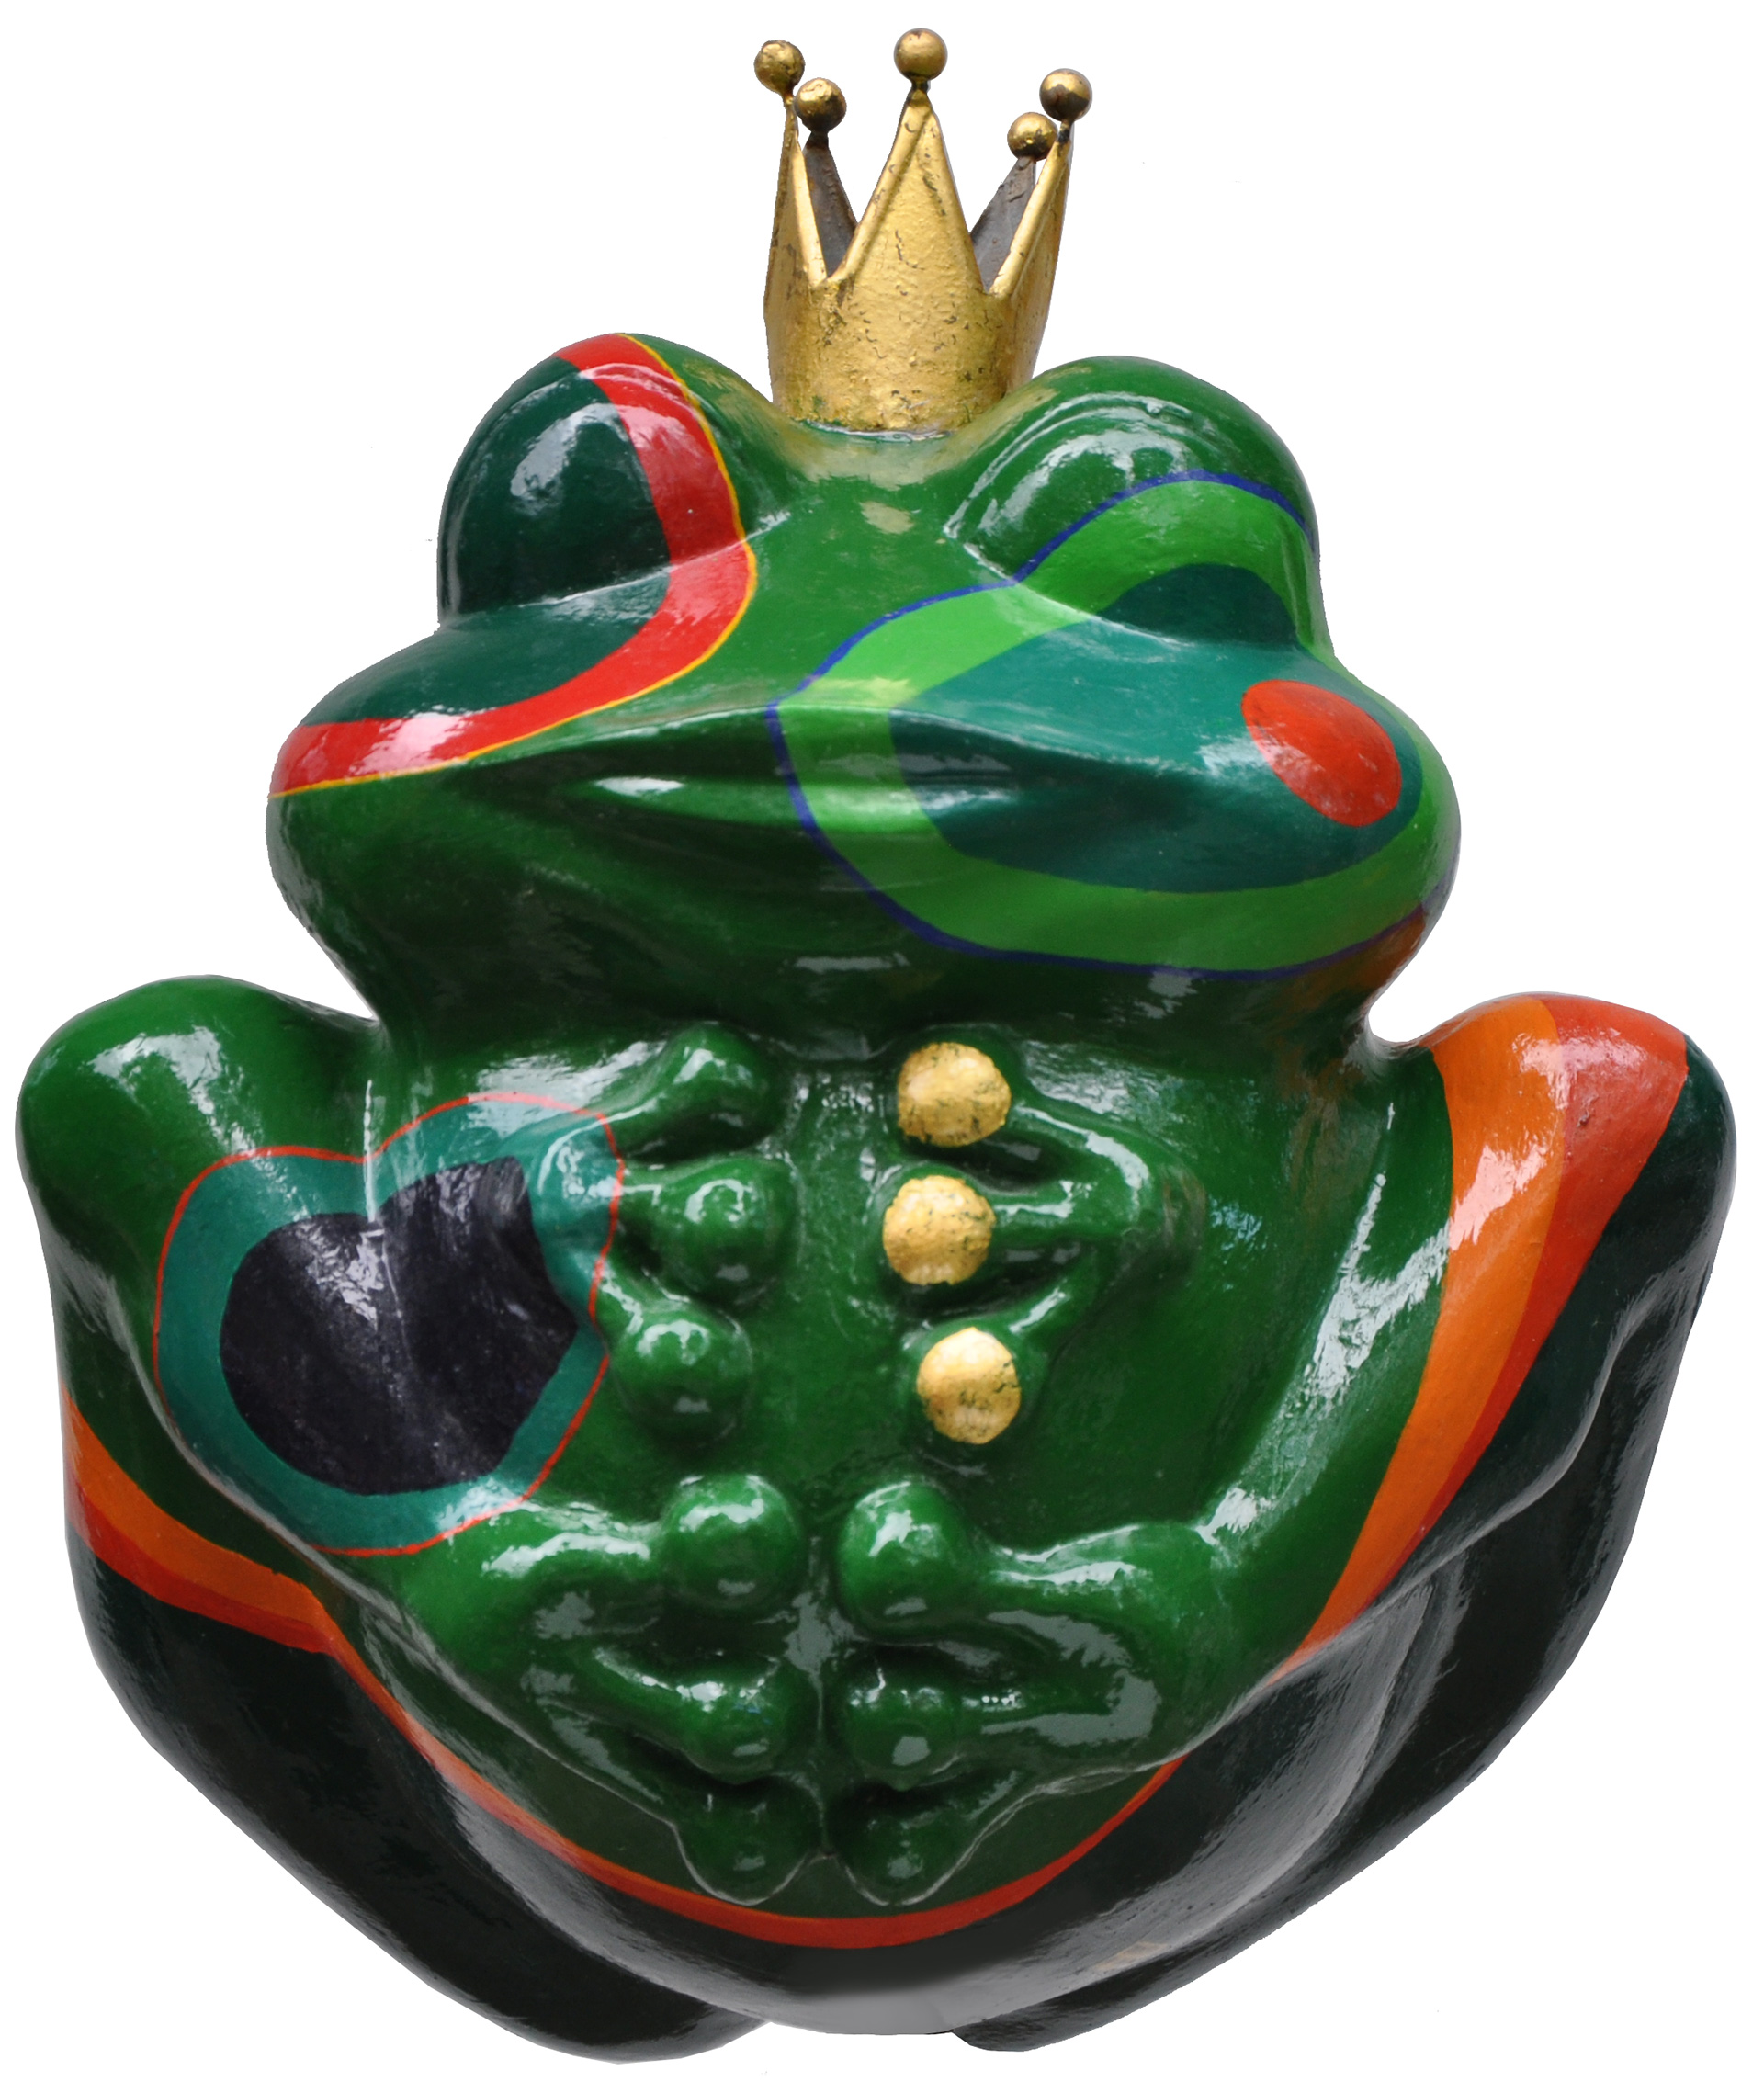 Froschkönig II